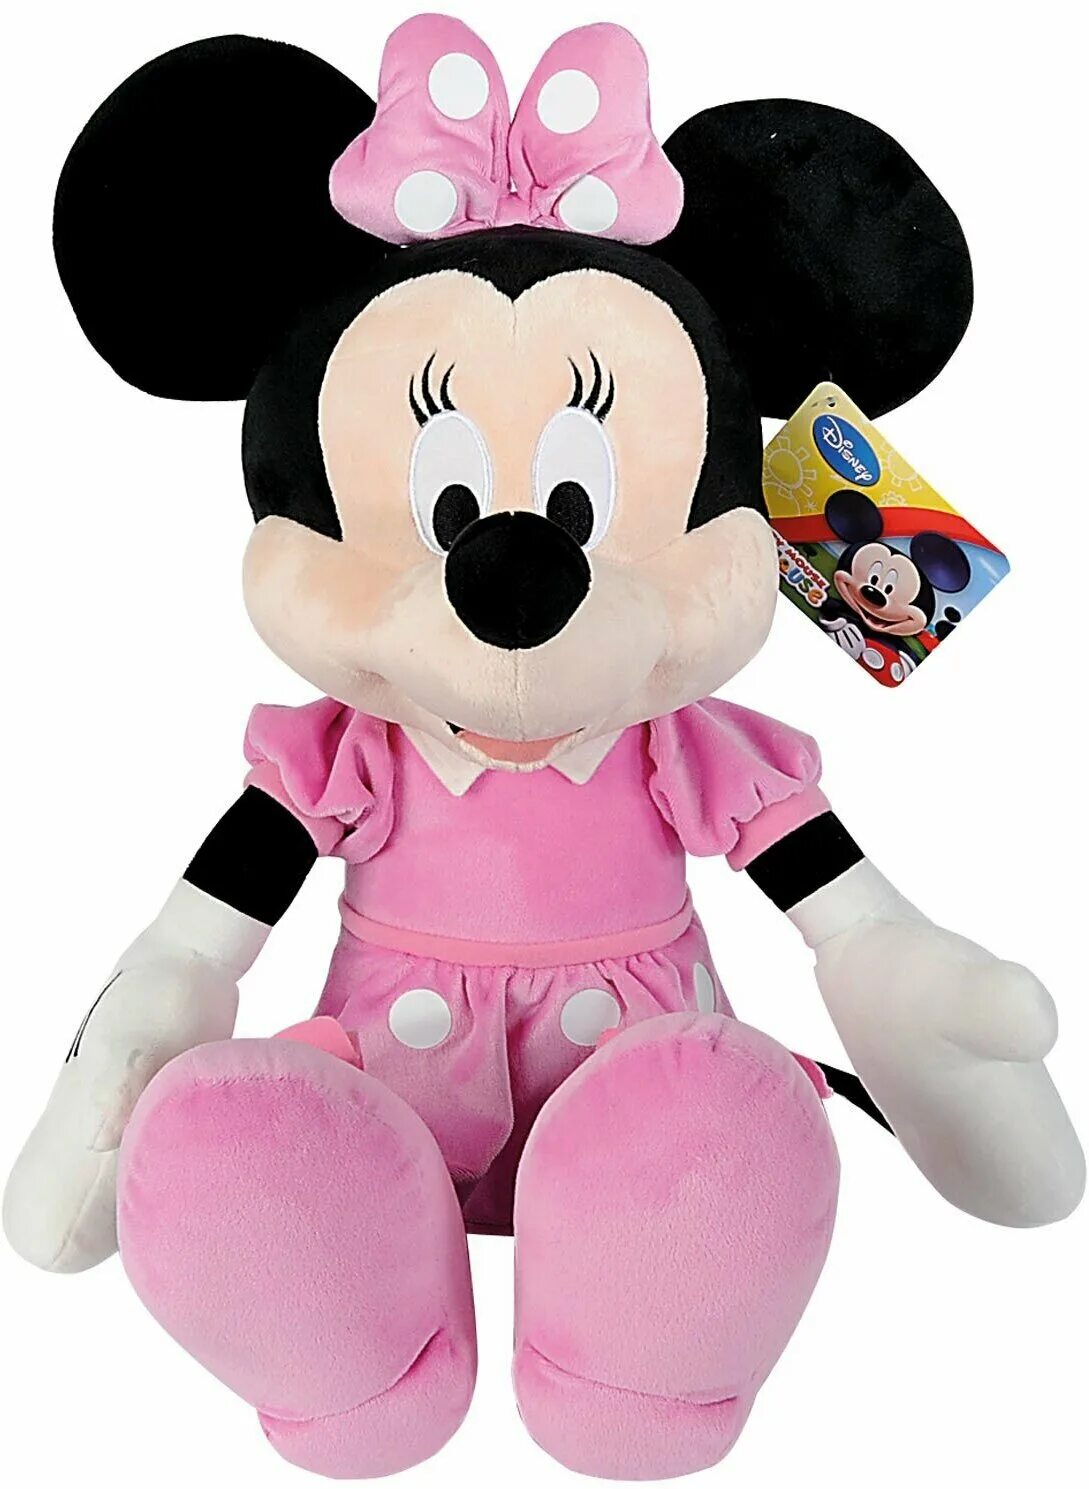 Игрушка минни. Минни Маус Nicotoy 25см. Мягкая игрушка Simba Минни Маус 25 см. Мини Маус мягкая игрушка Дисней. Мягкая игрушка Minnie Mouse.